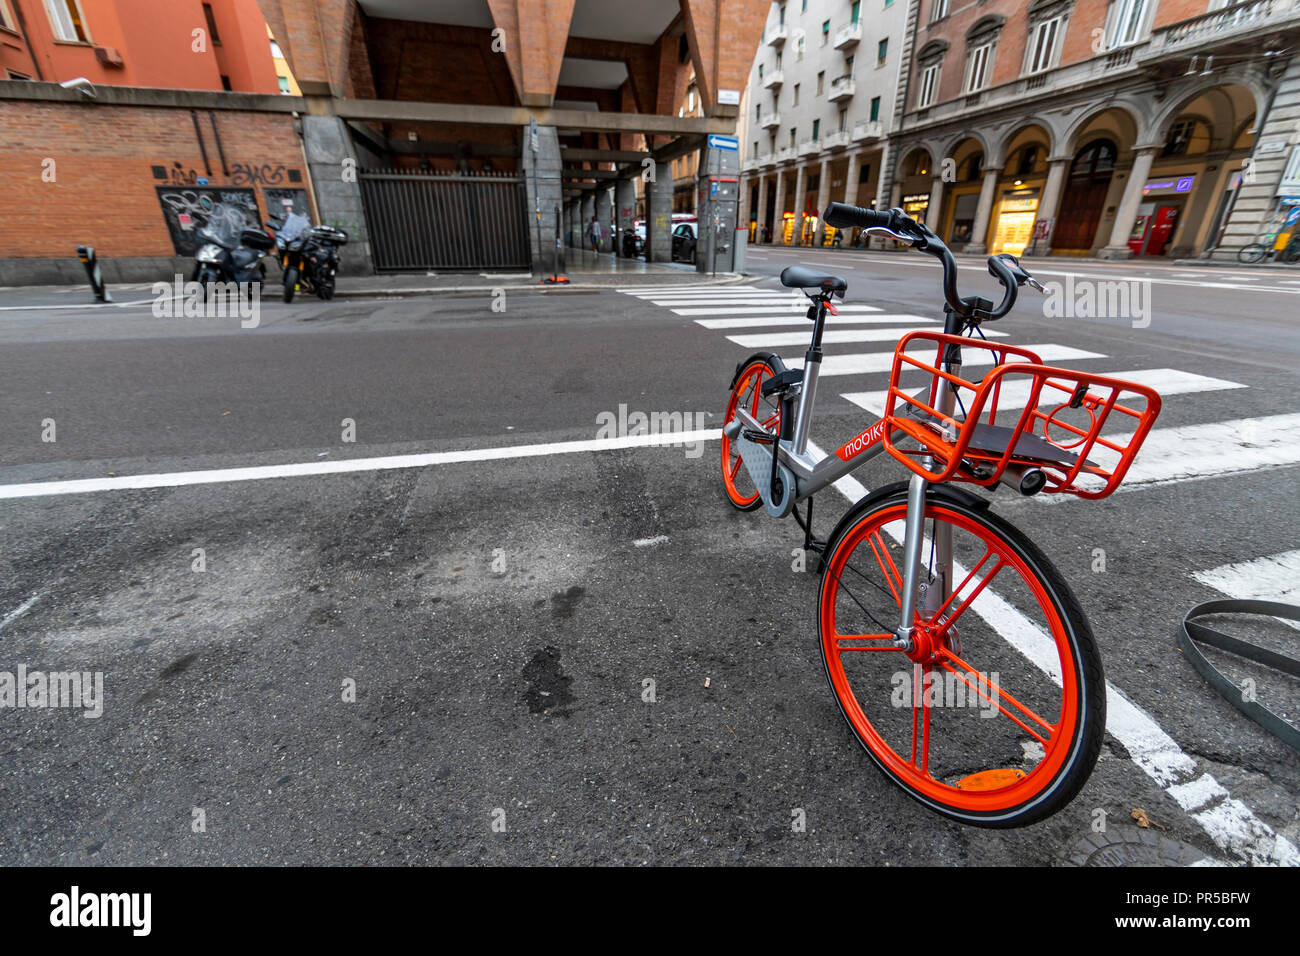 Vadebike Barcelone, enfin un stationnement vélo intelligent ?